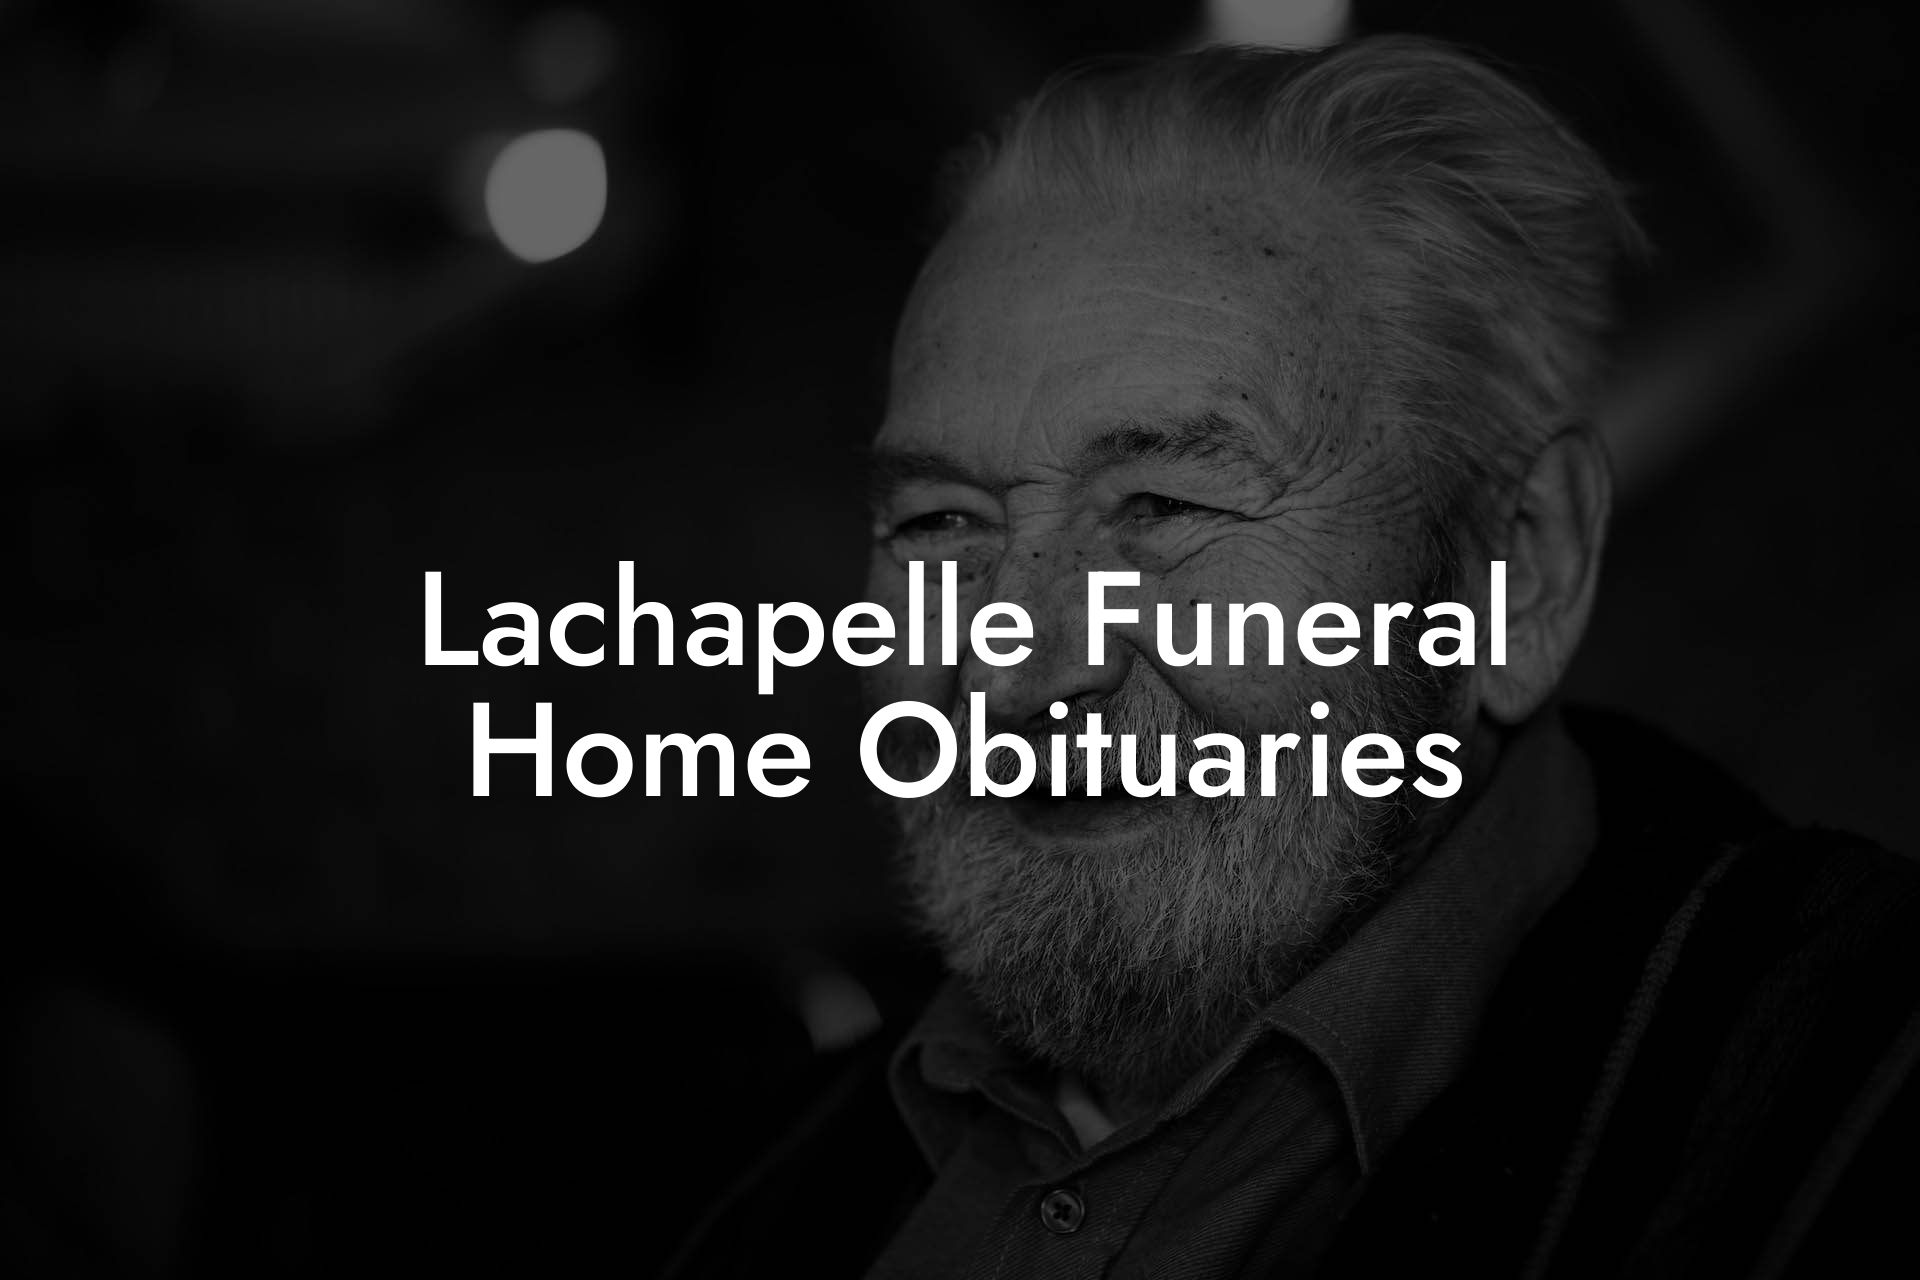 Lachapelle Funeral Home Obituaries